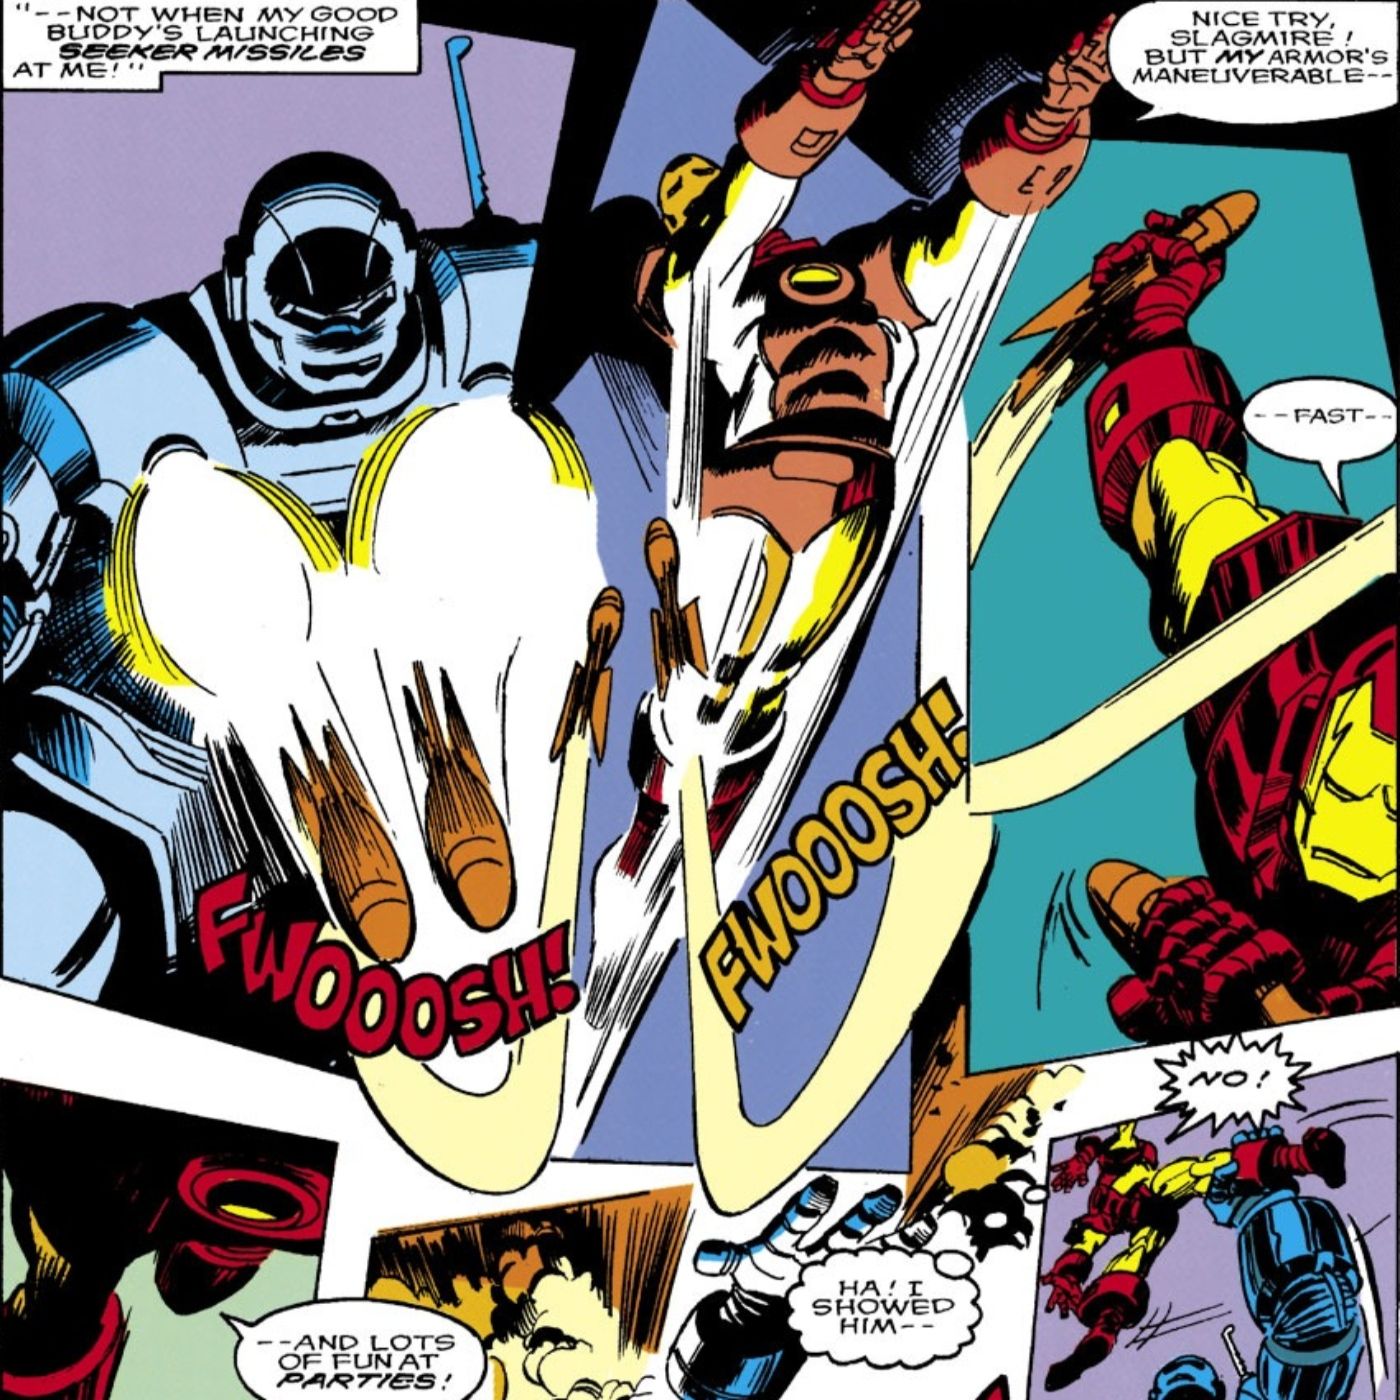 Iron Man fighting a villain wearing their own 'Iron Man' armor.